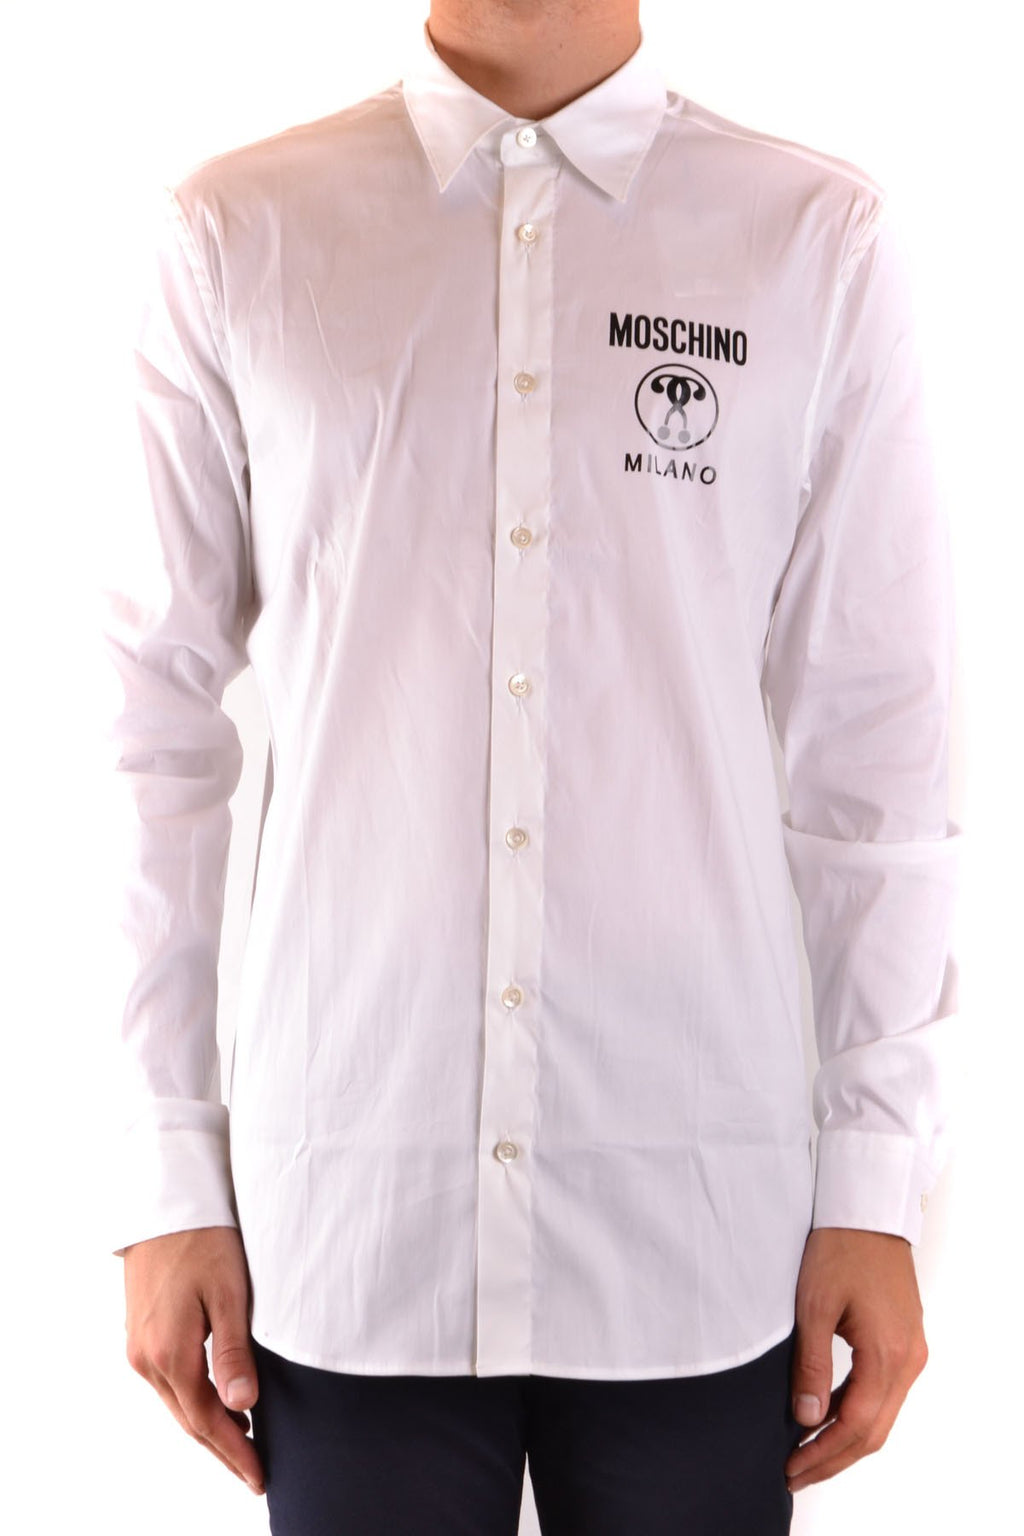 Moschino Men Shirt